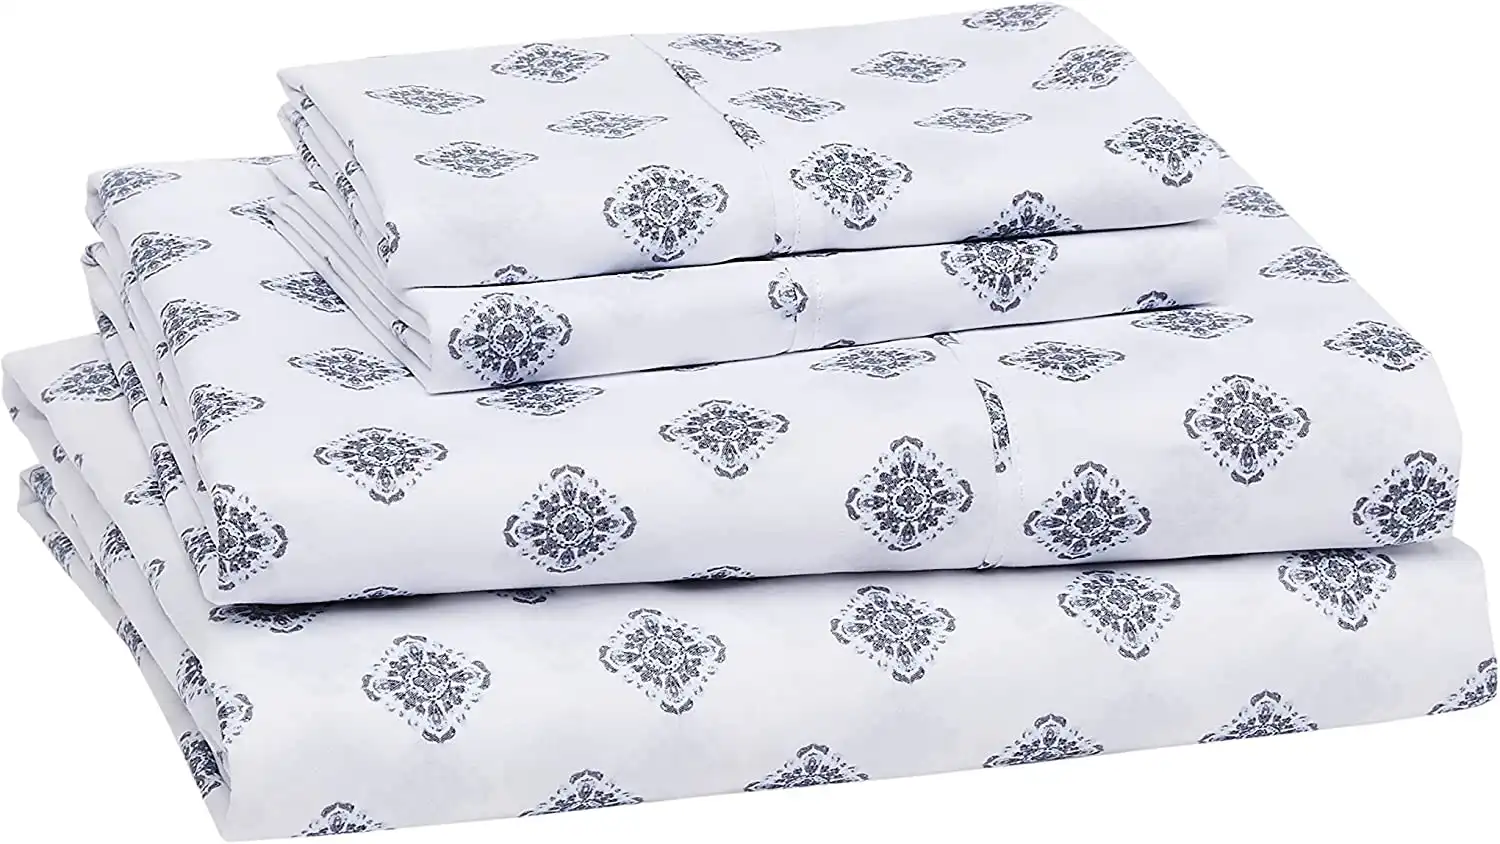 King Size Microfiber Bed Sheet Set, 36 cm Deep Pockets Lightweight Soft Easy Care Spa Blue